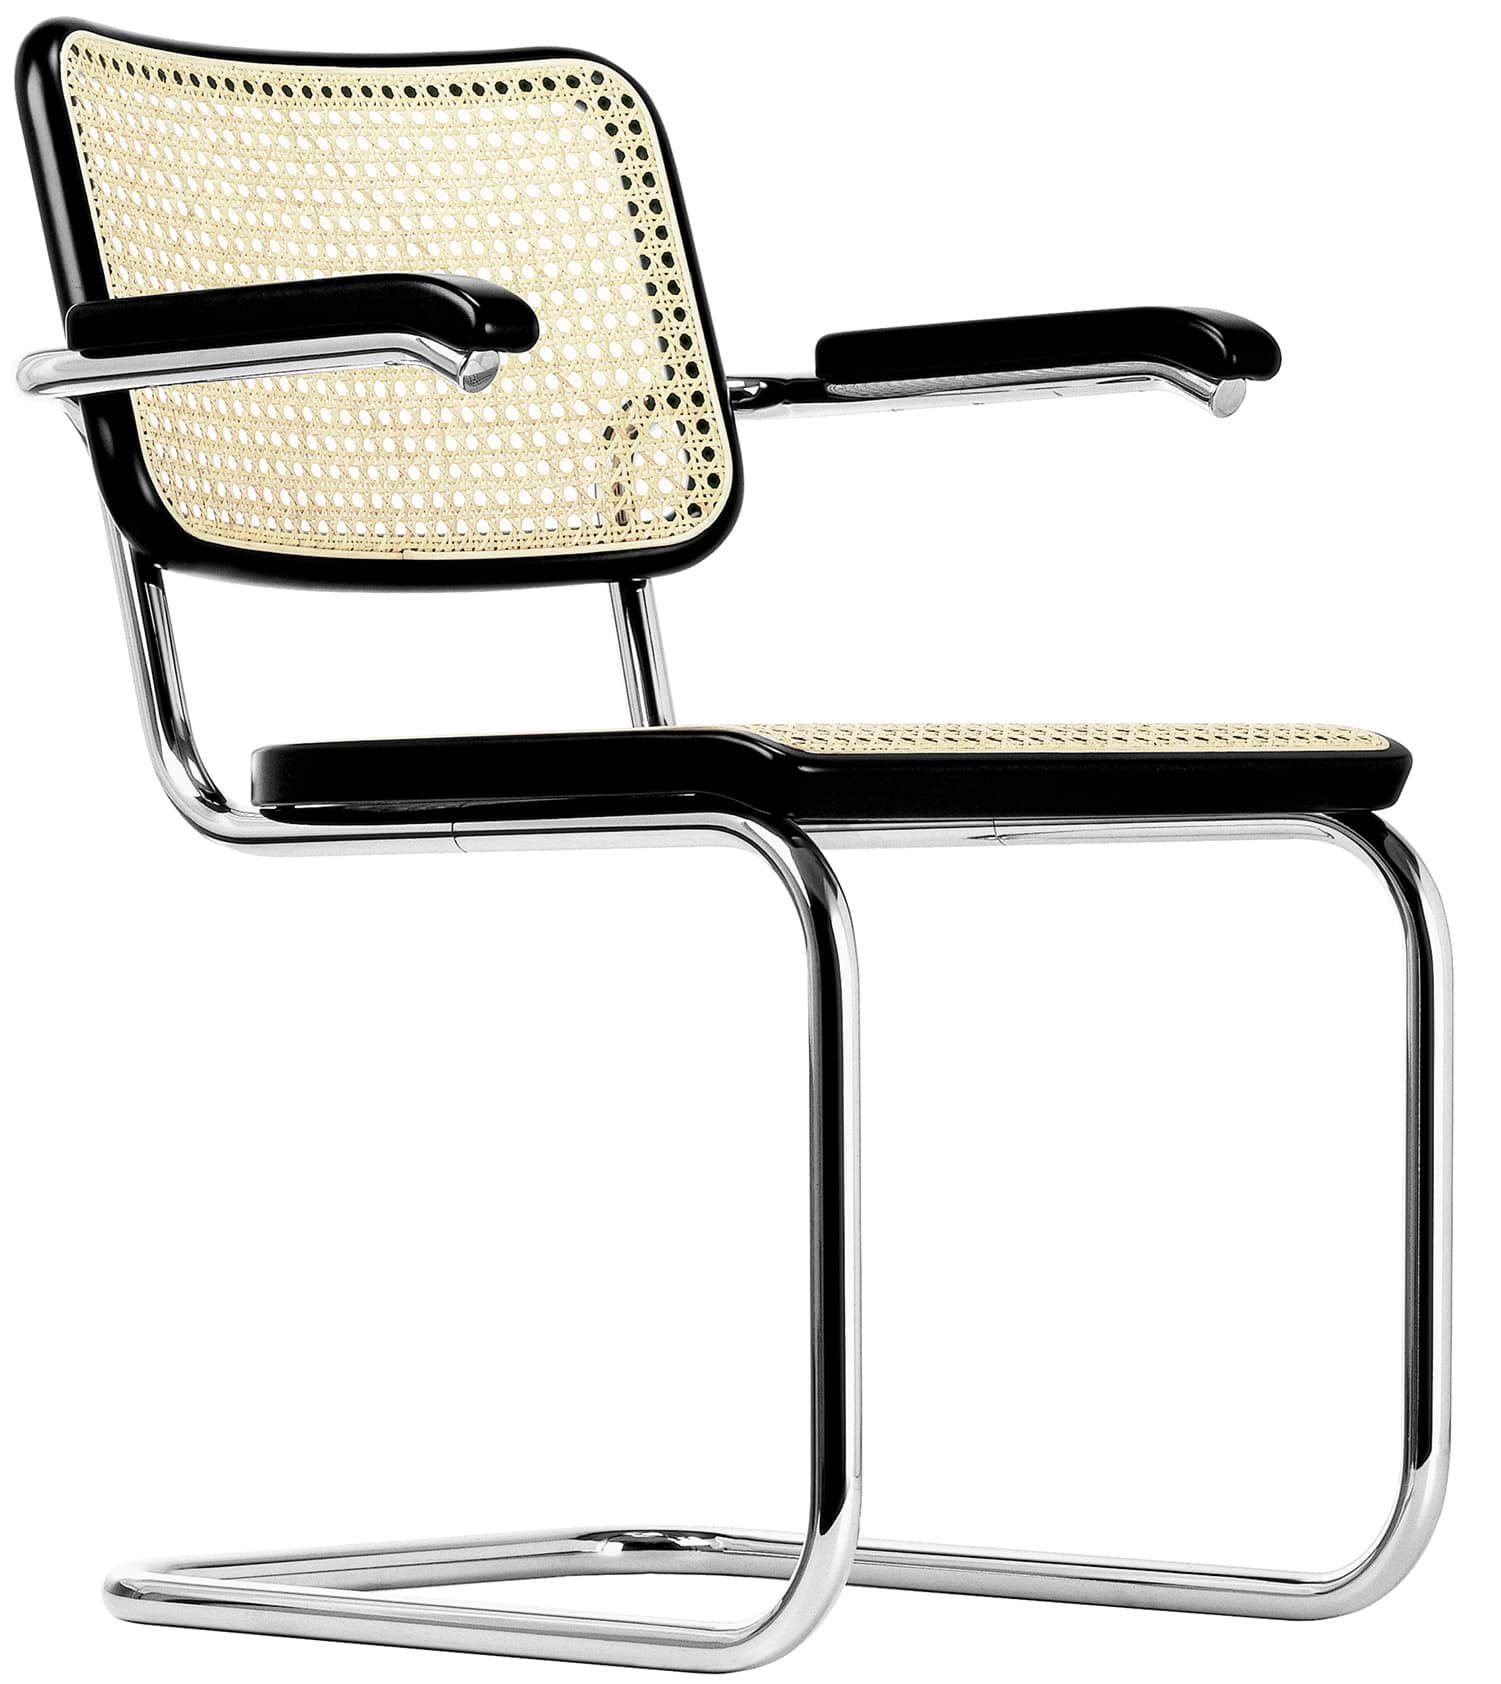 S 64 V Konsol sandalye - Marcel Breuer resmi